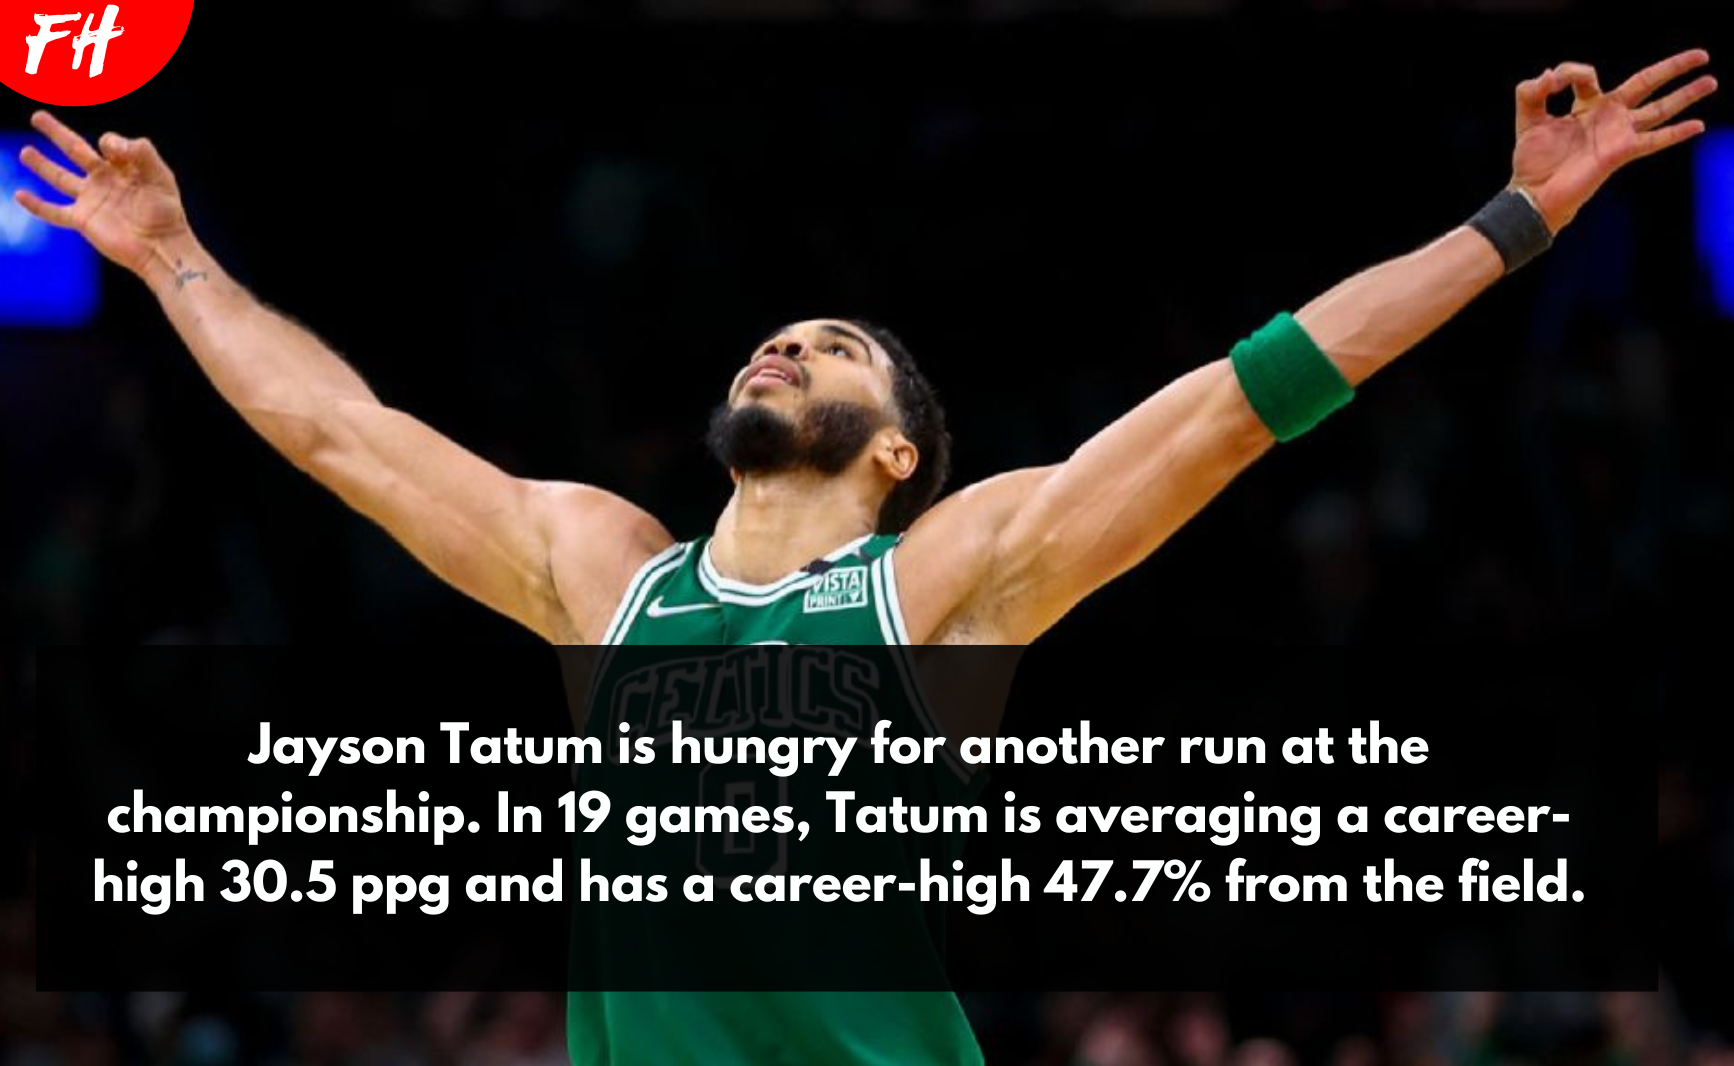 Jayson Tatum is averaging a career-high 30.5 ppg